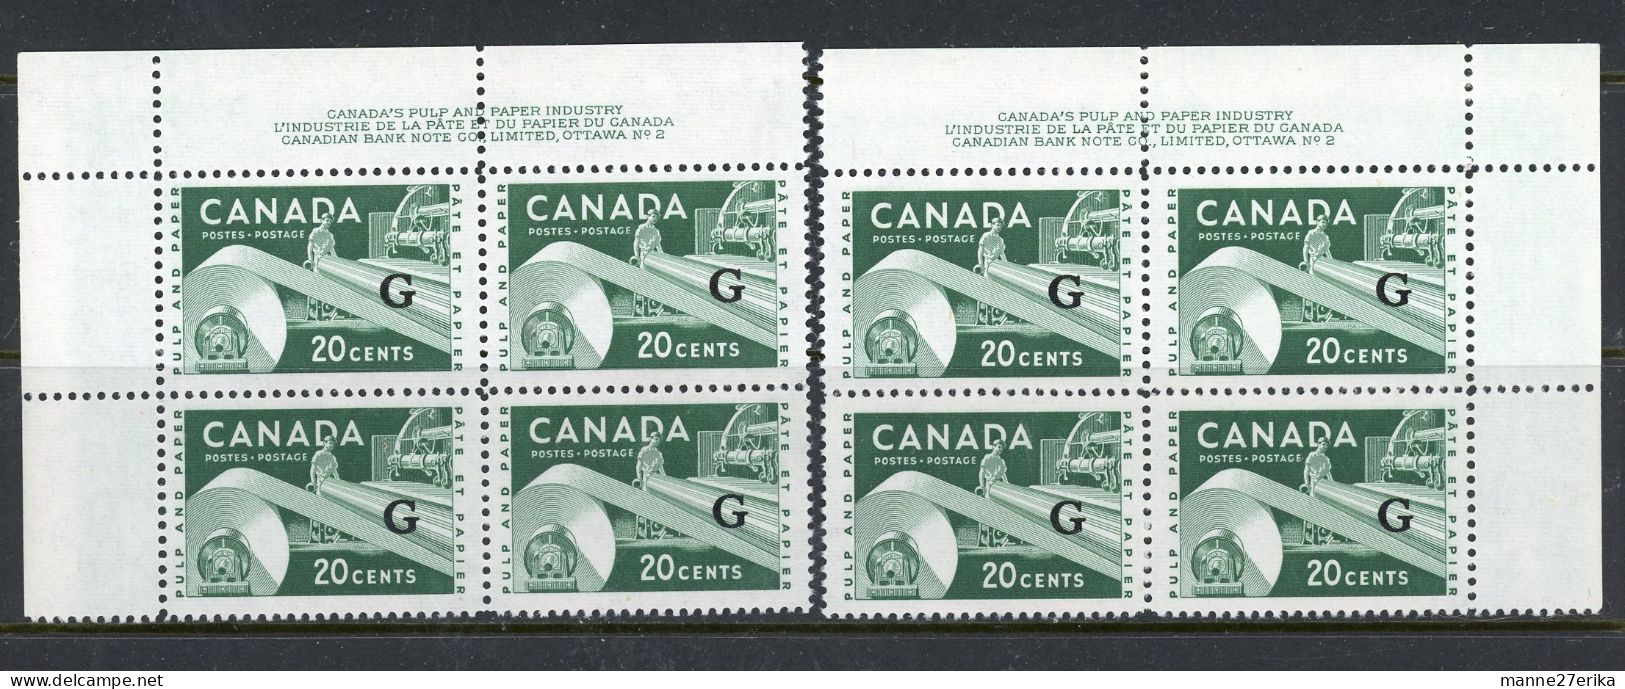 Canada MNH Plate Block 1955-56  Paper Industry Definitives - Ongebruikt